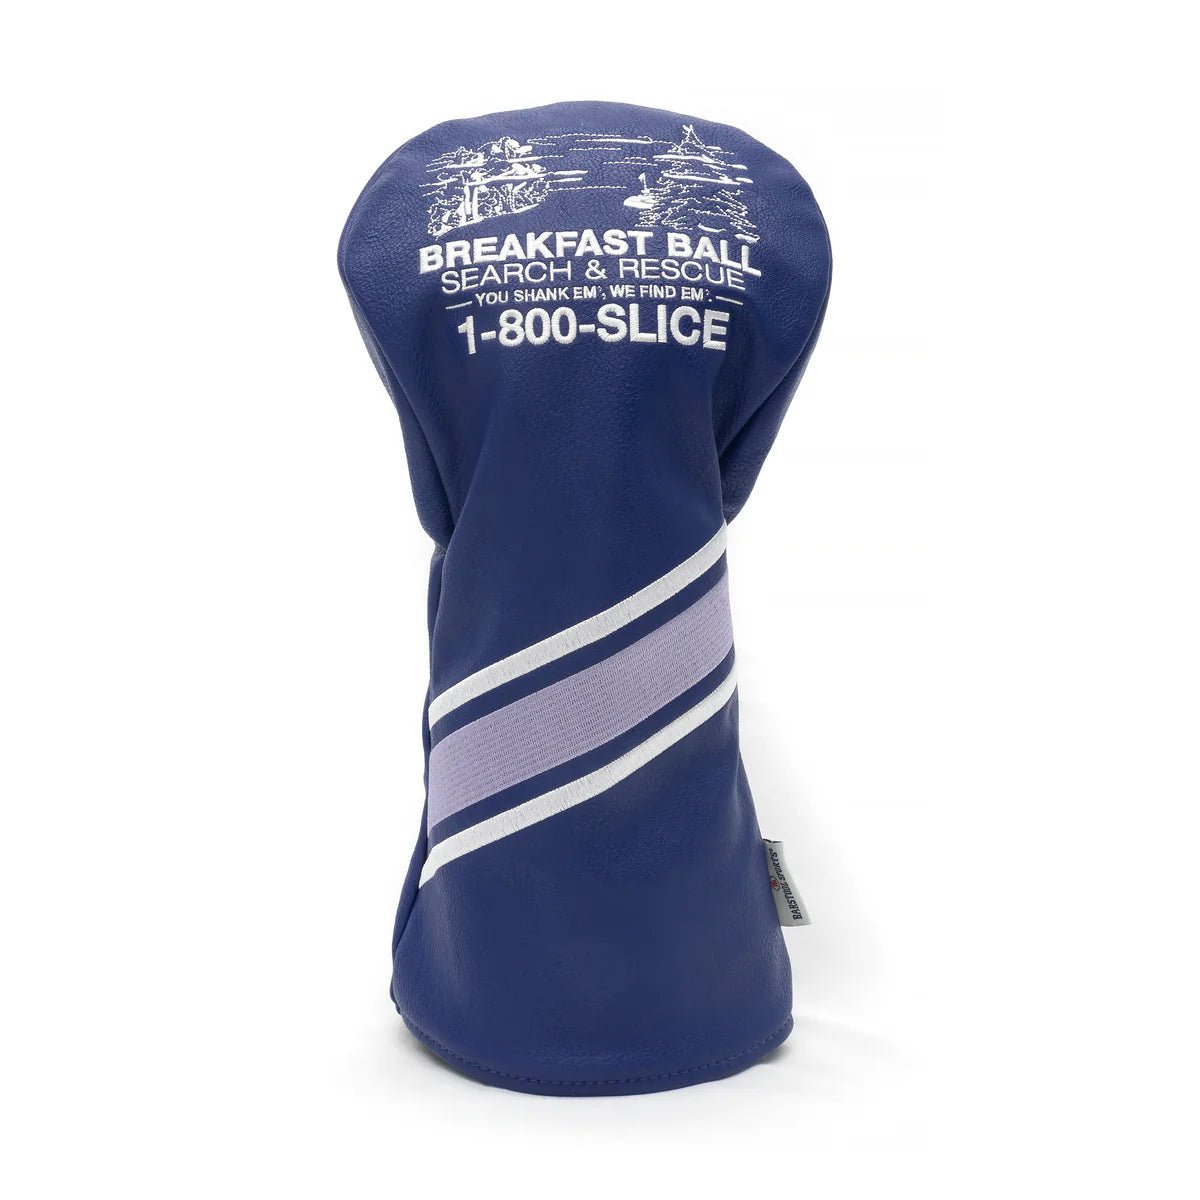 Barstool Breakfast Ball Rescue Driver Headcover